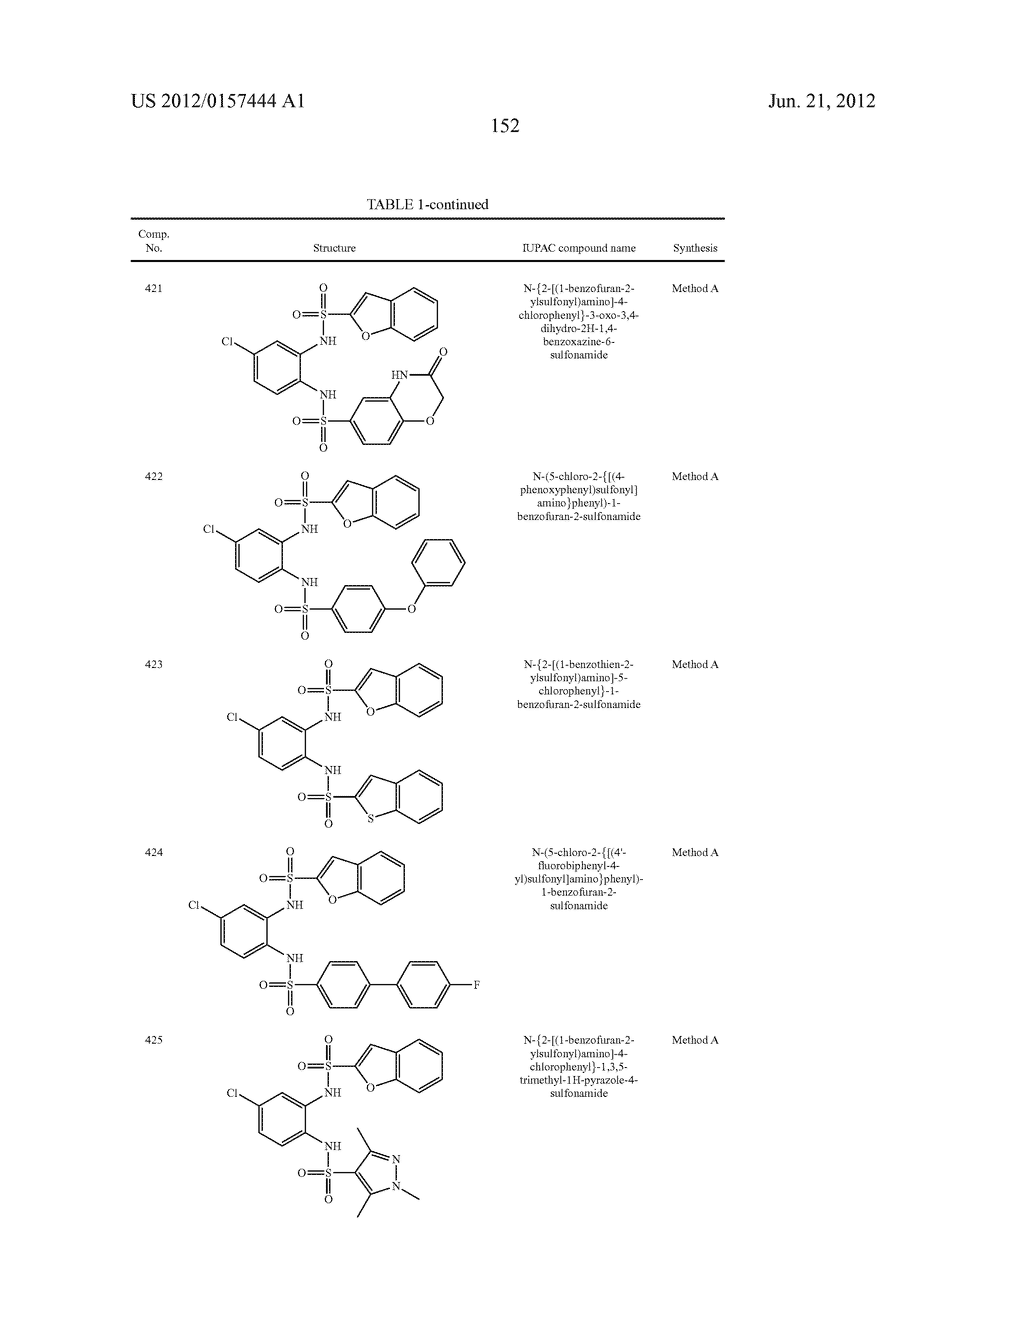 NOVEL 1,2- BIS-SULFONAMIDE DERIVATIVES AS CHEMOKINE RECEPTOR MODULATORS - diagram, schematic, and image 153